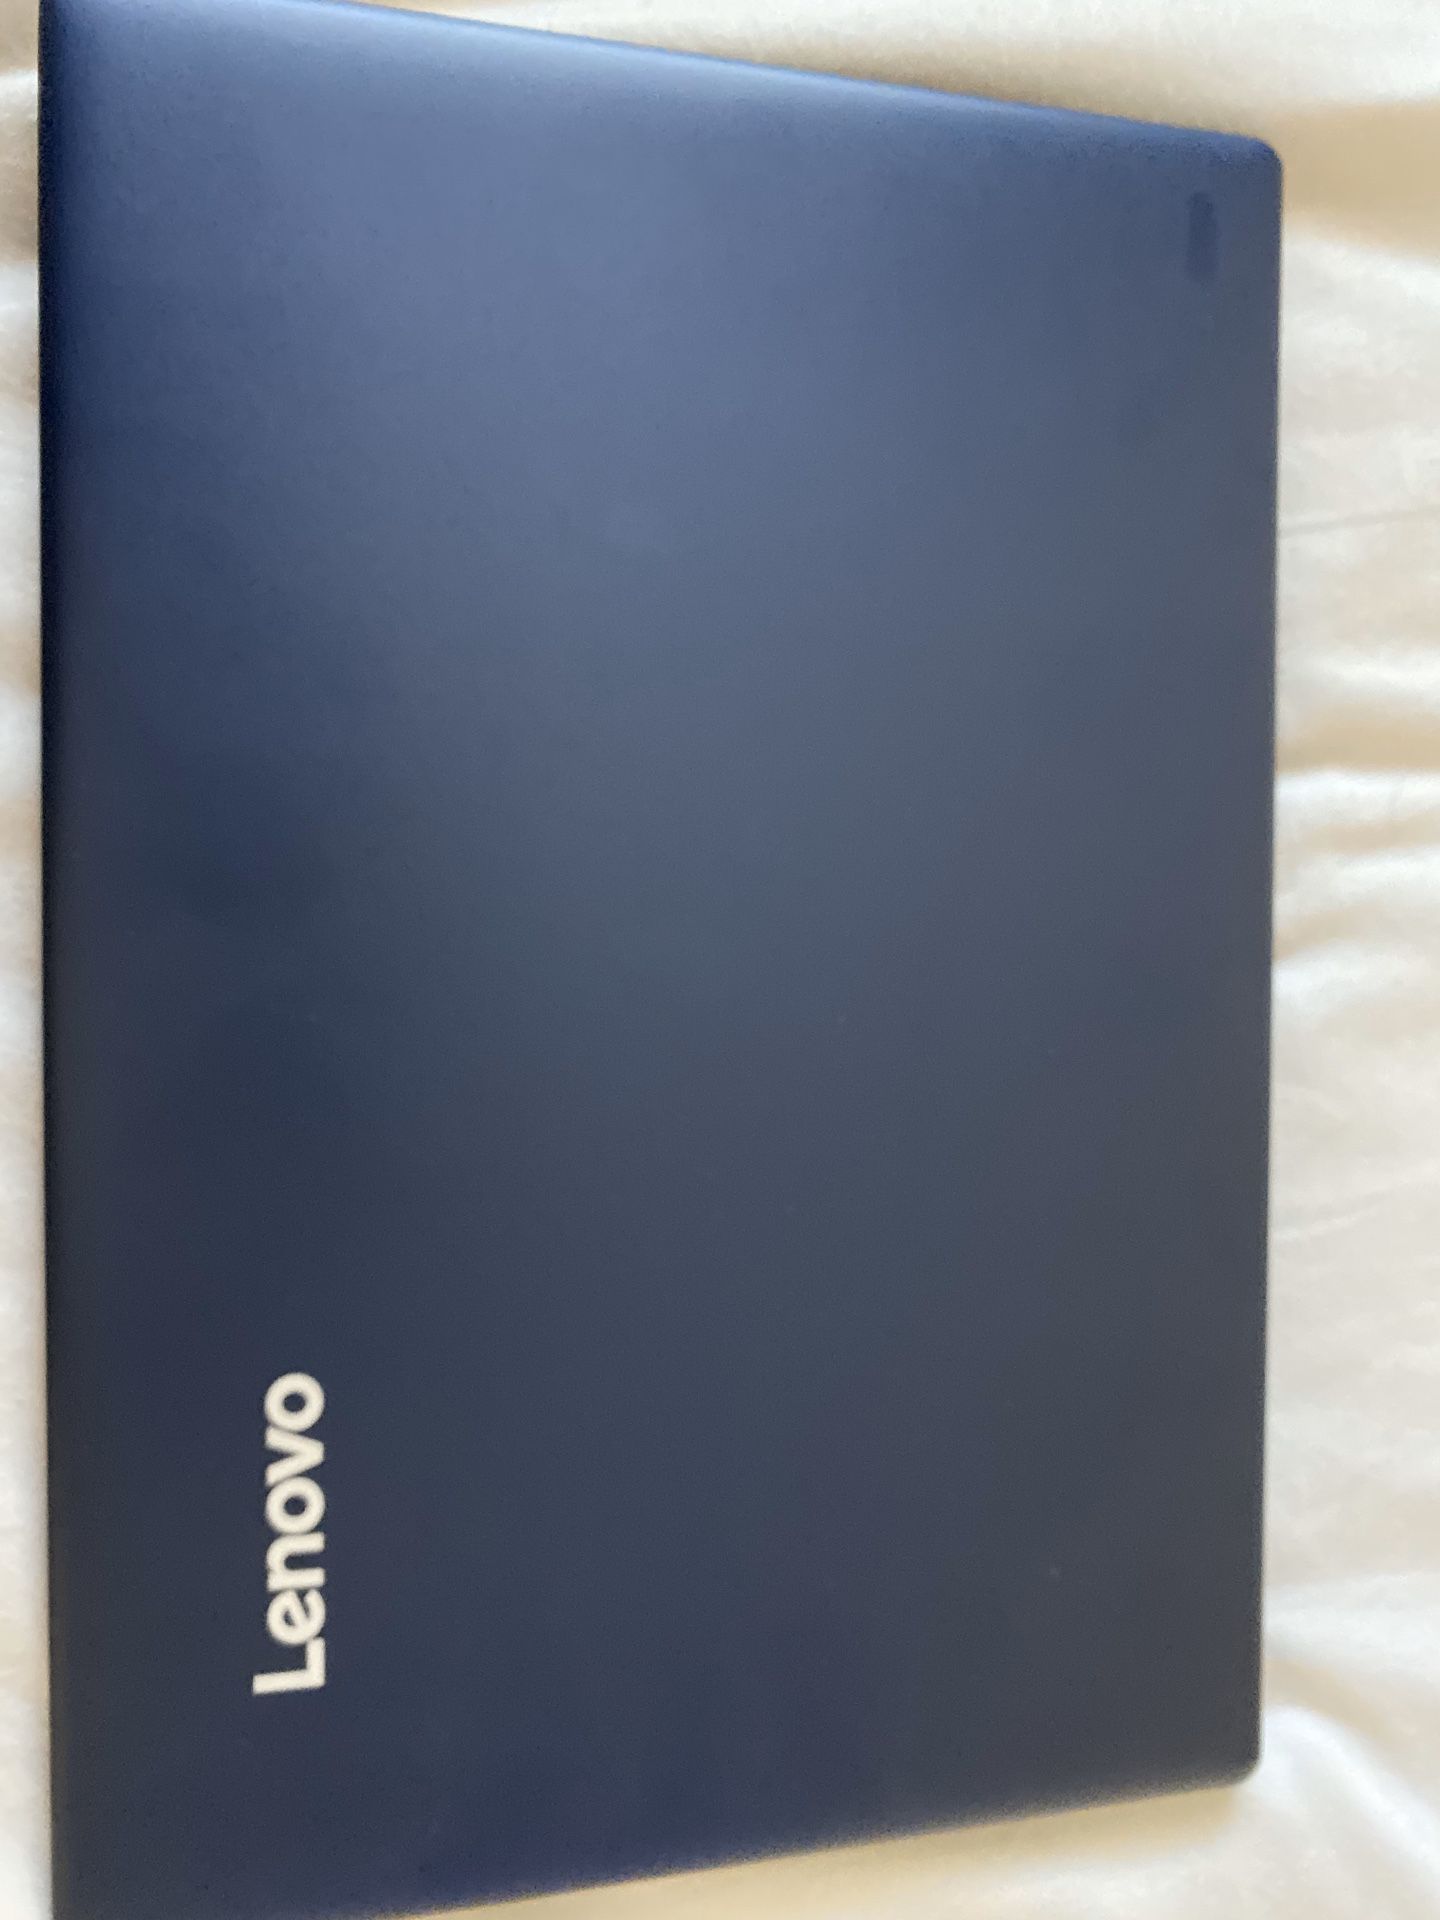 Lenovo laptop base model 100s